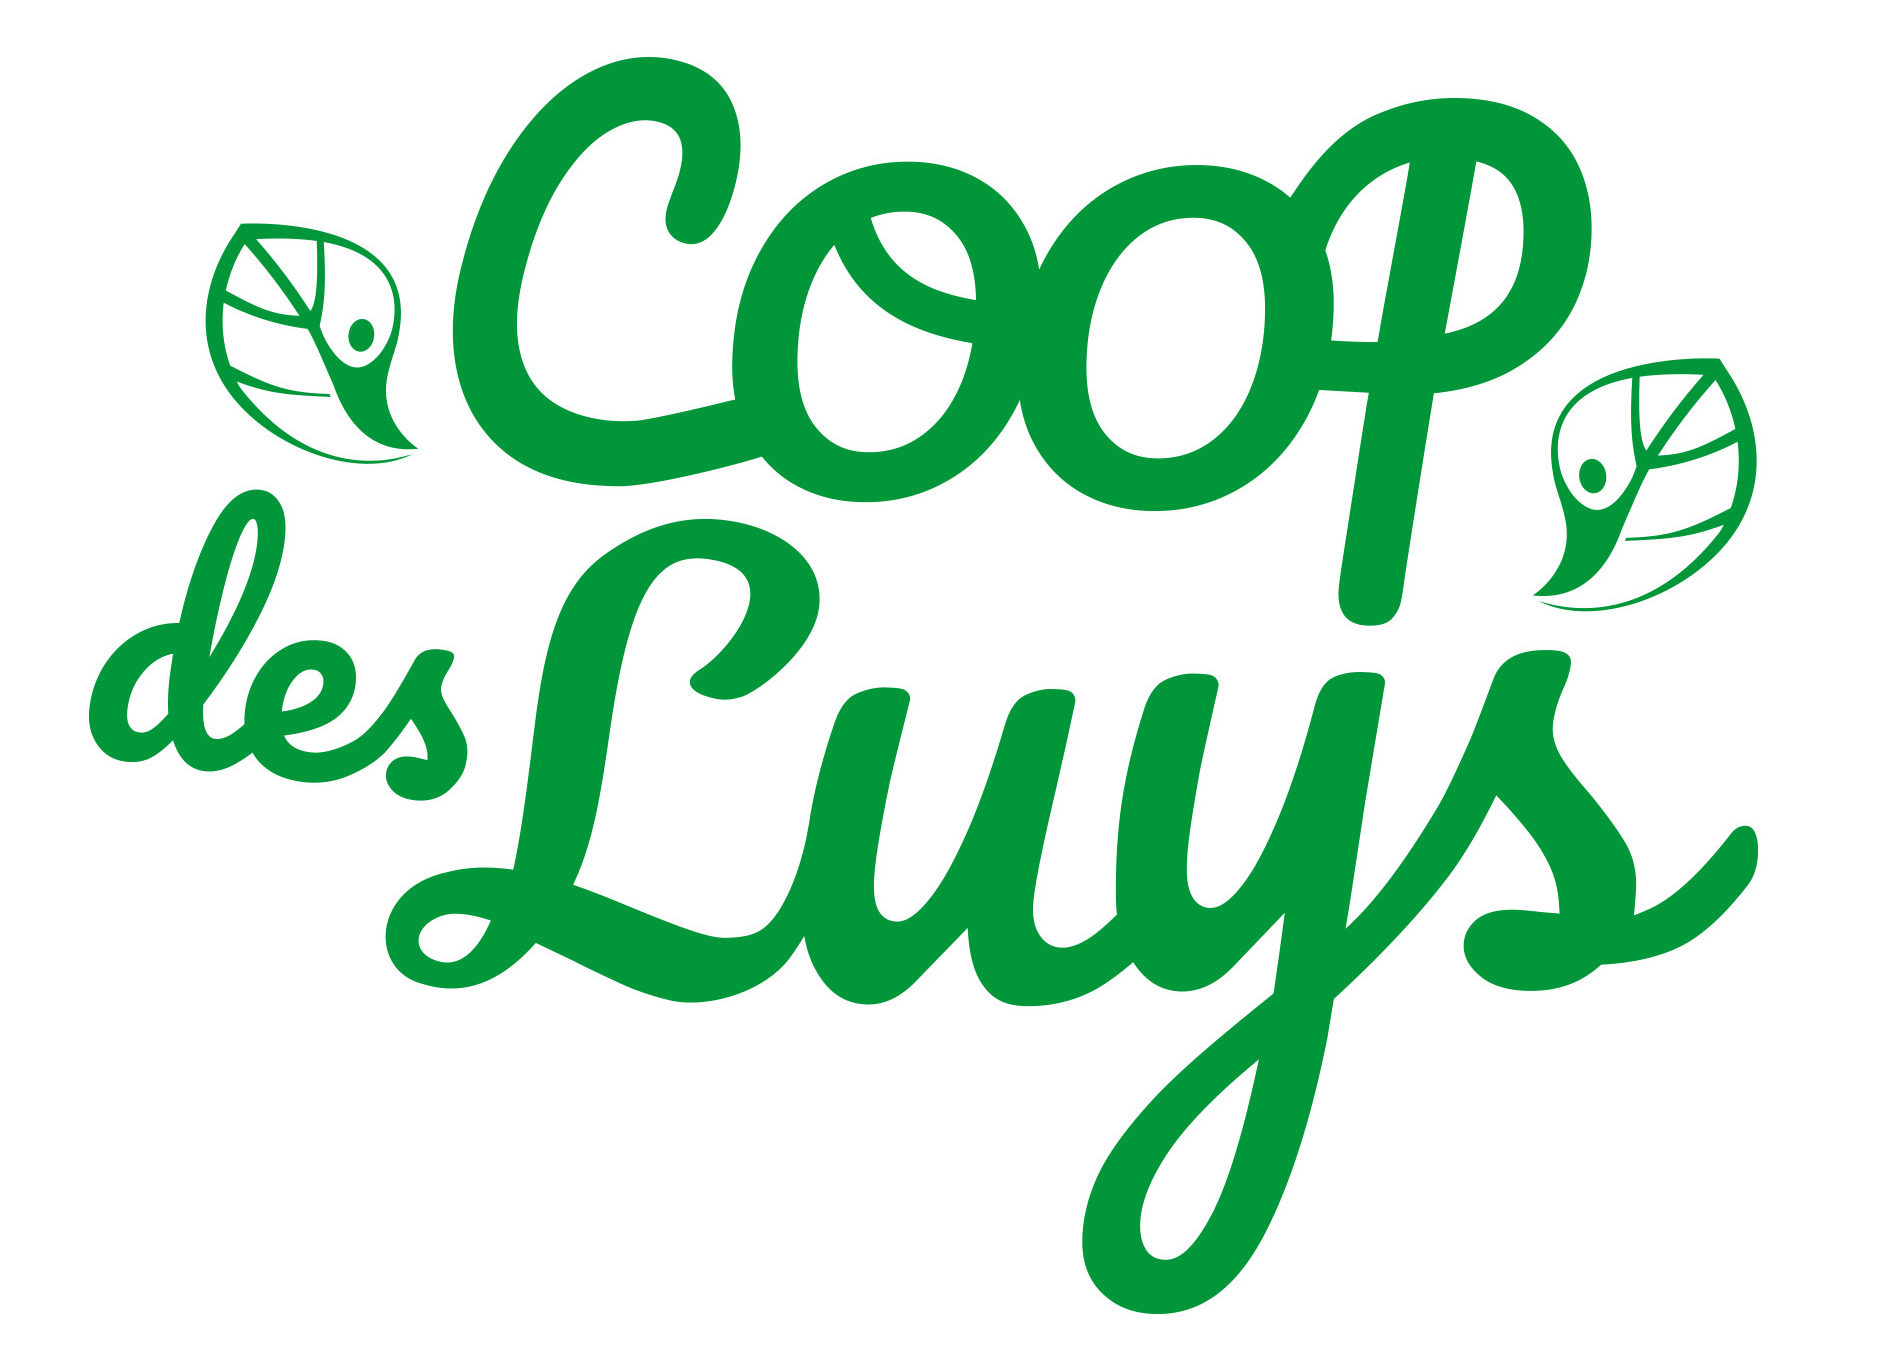 La Coop des Luys